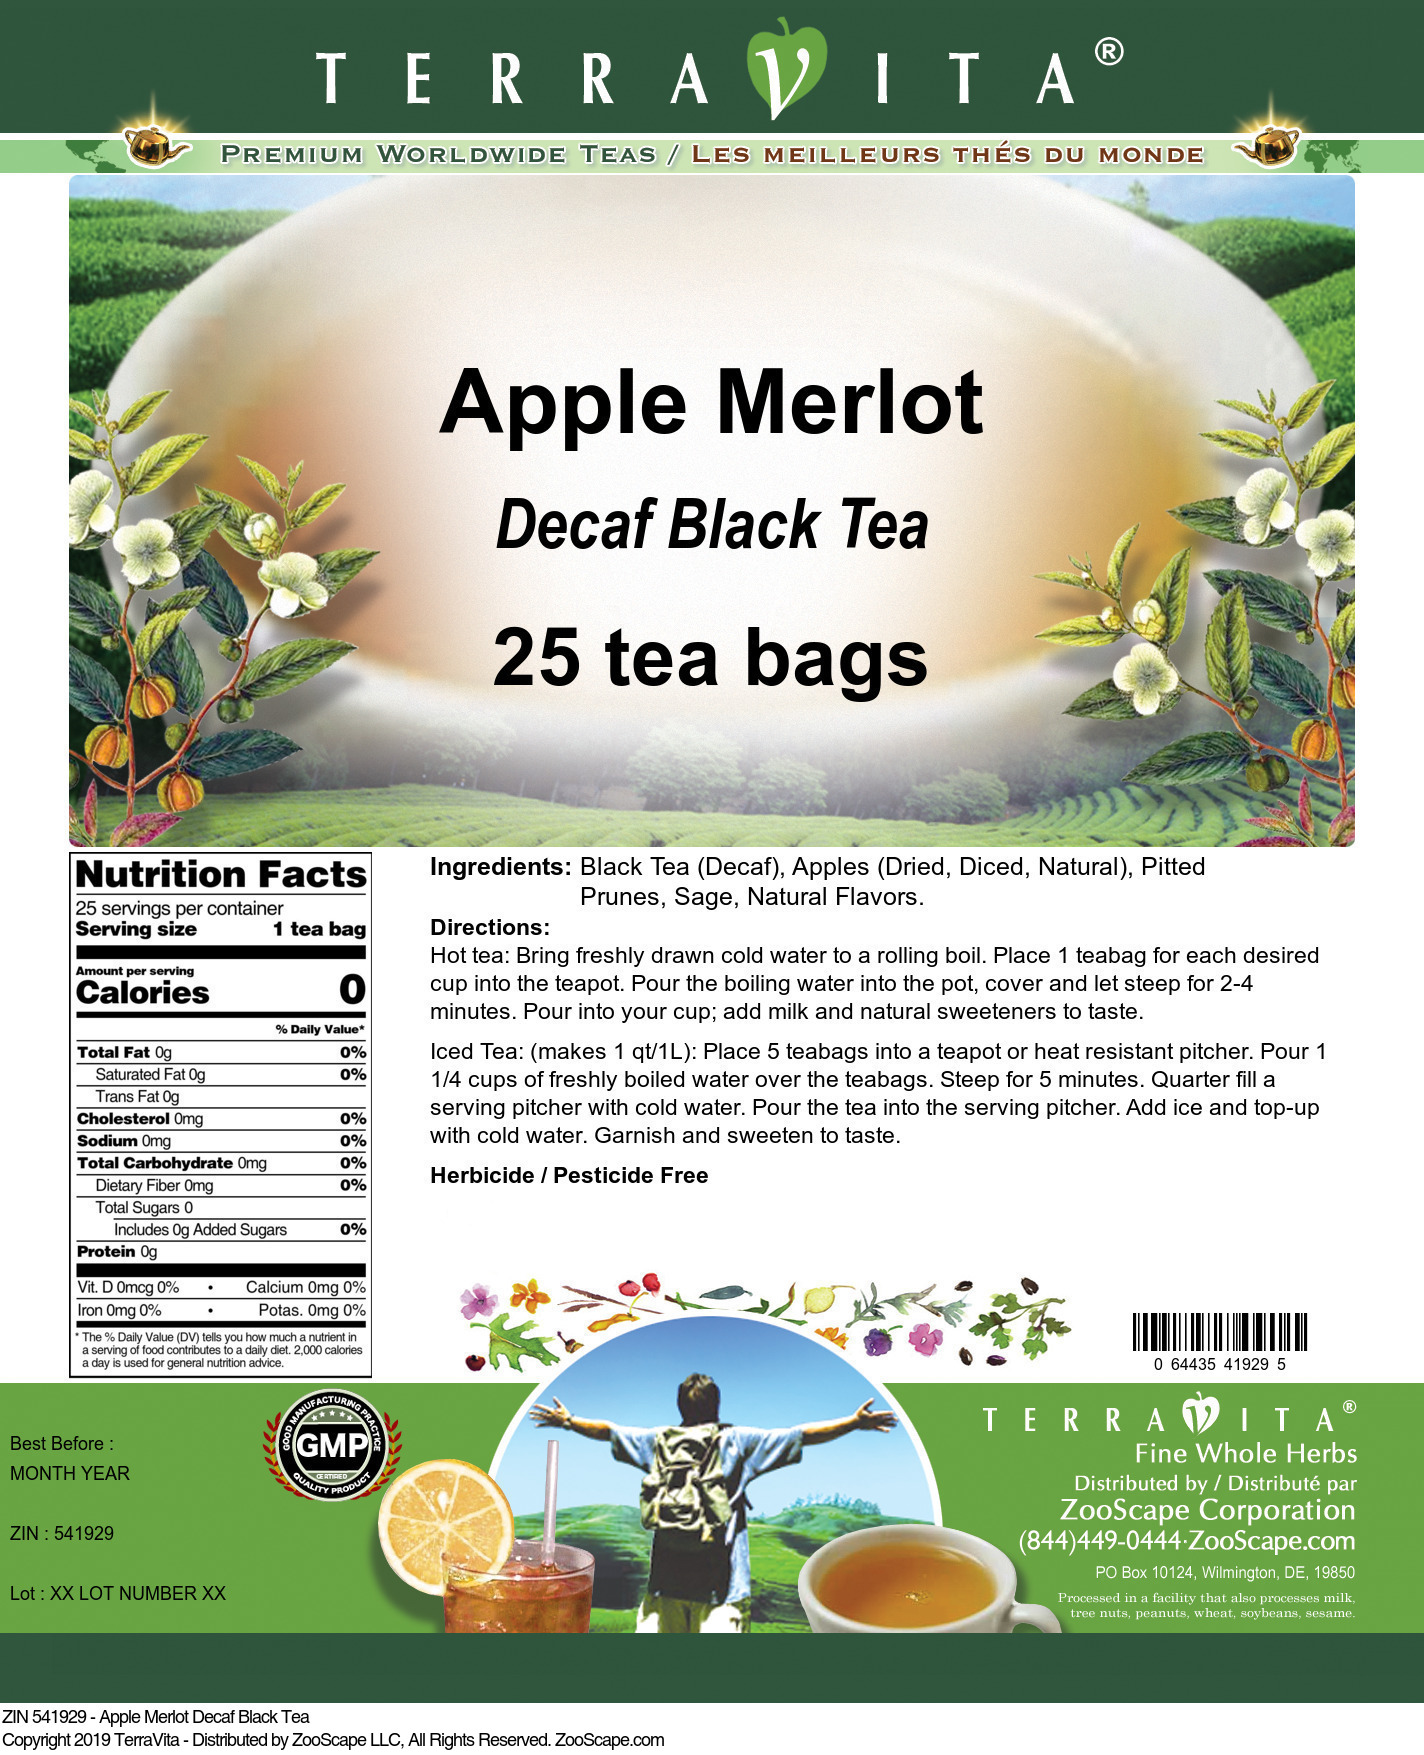 Apple Merlot Decaf Black Tea - Label